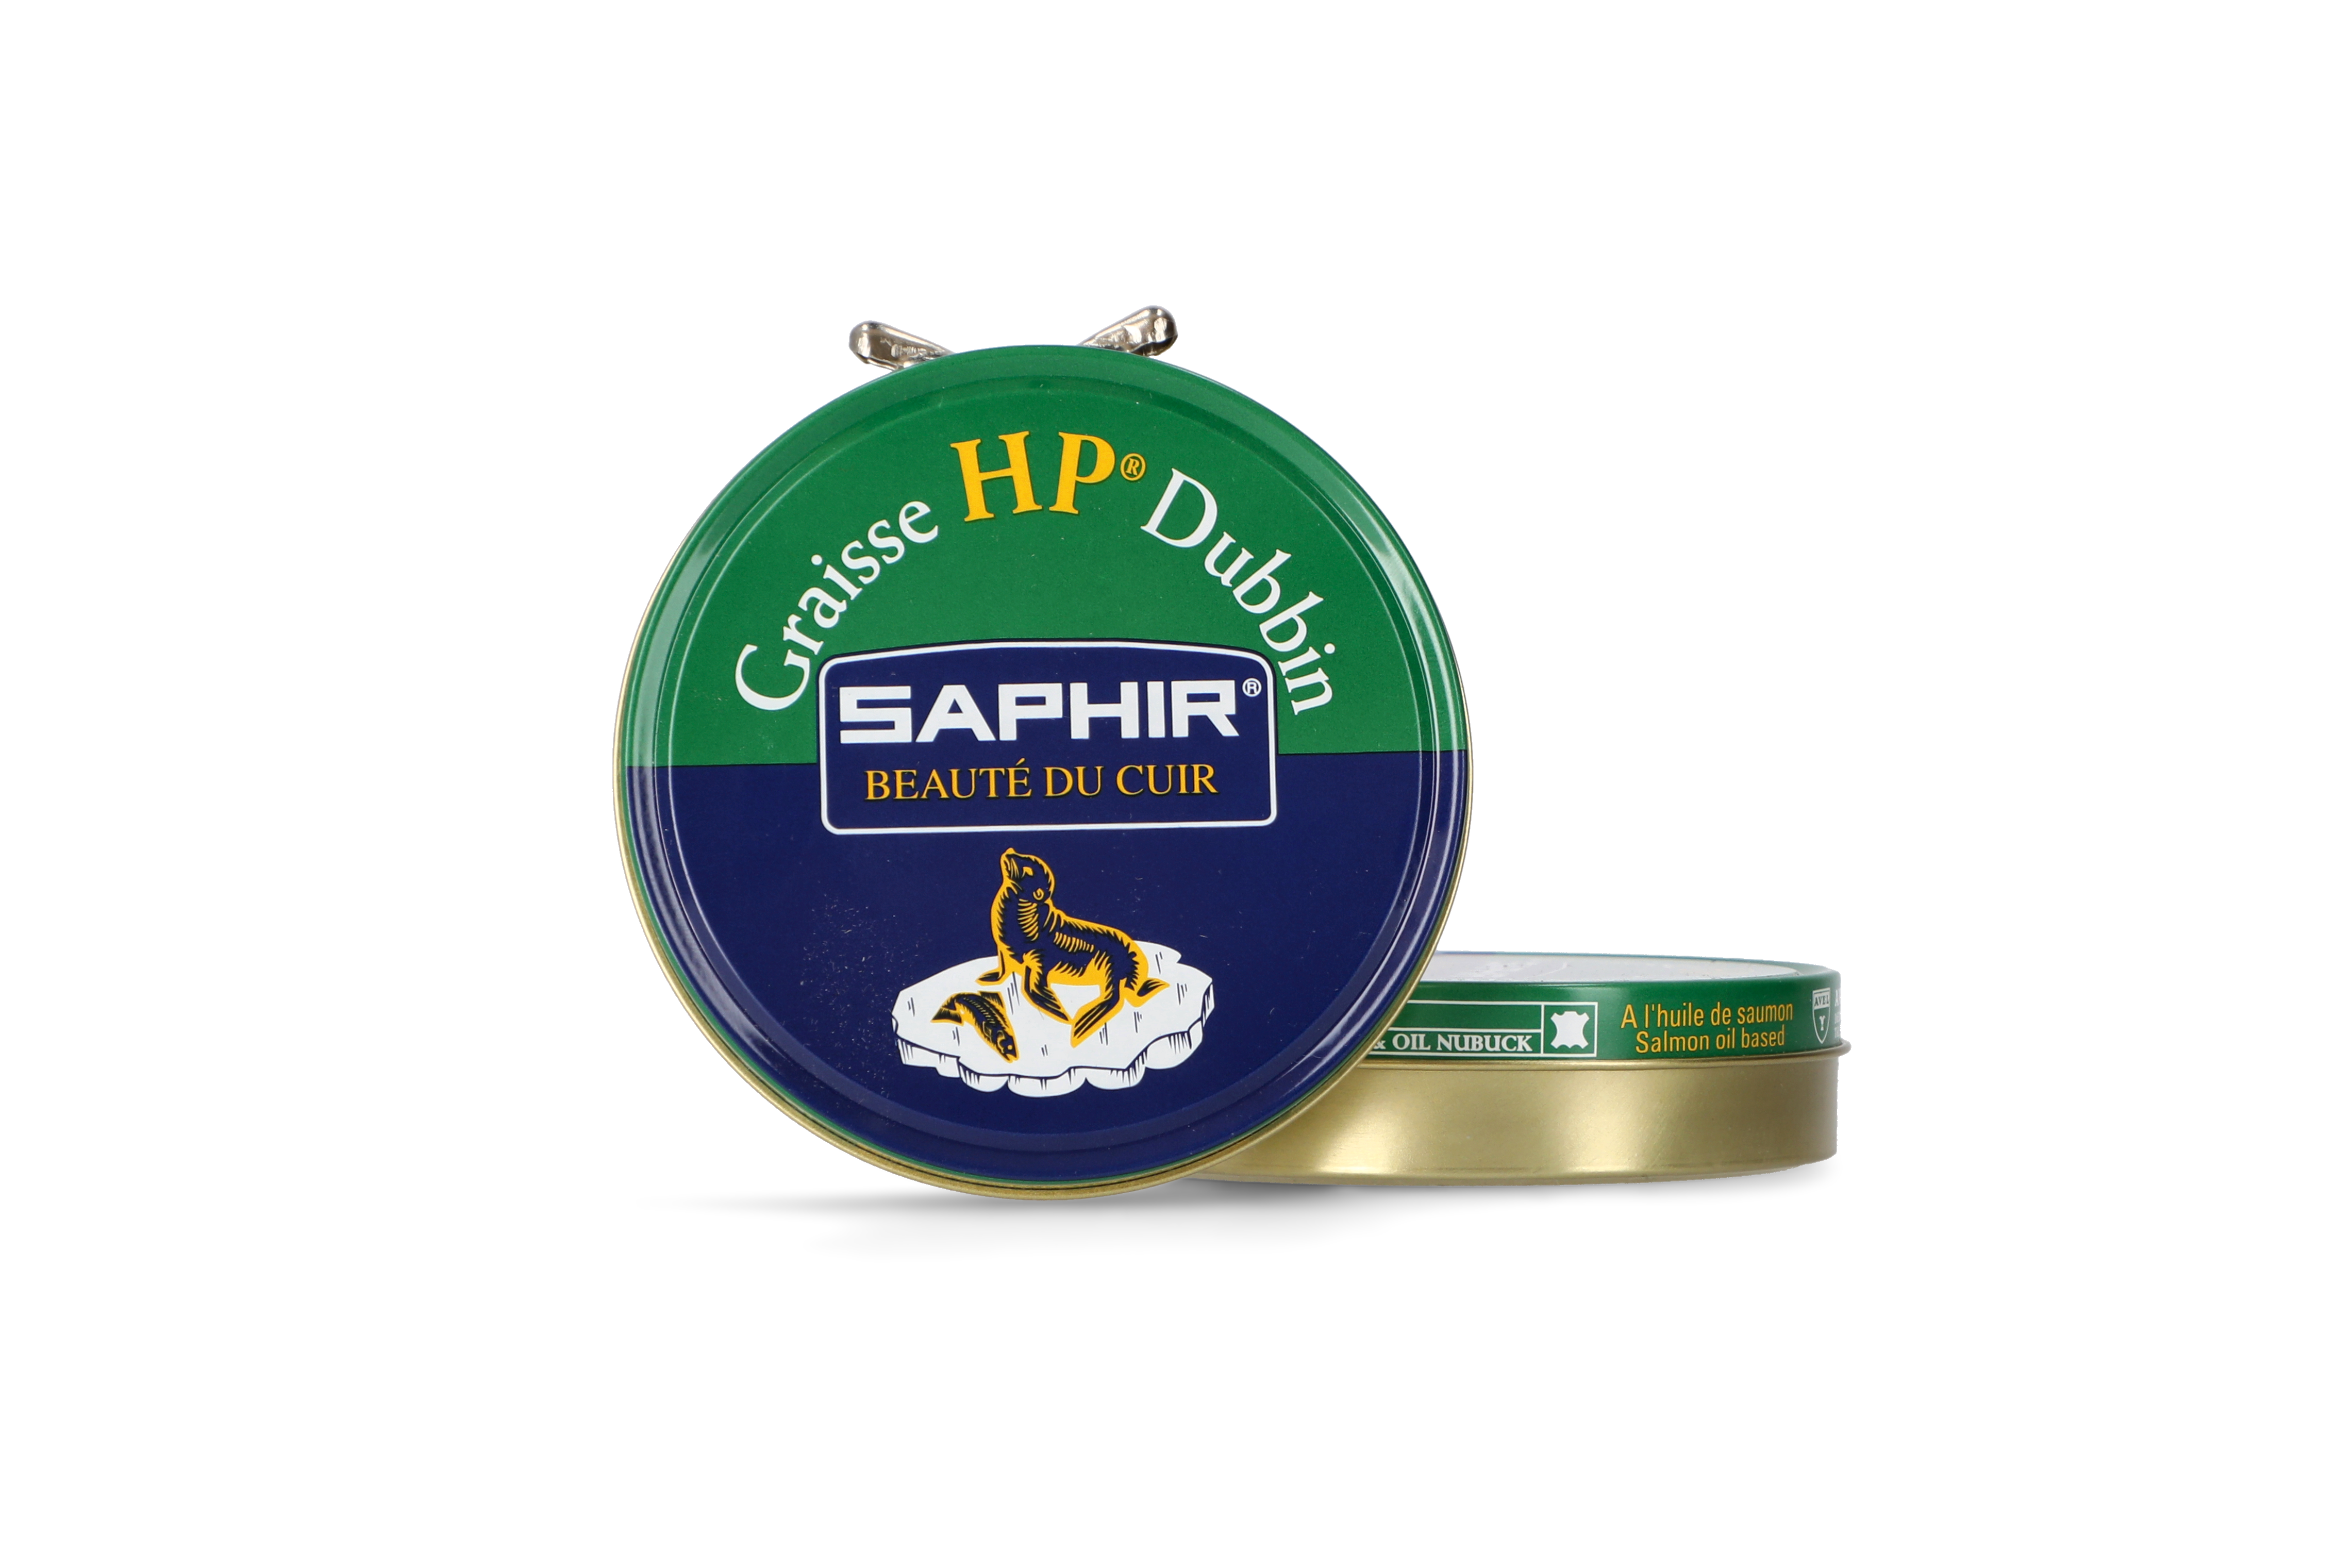  Saphir Grease HP Dubbin – Waterproof Leather Shoe Care